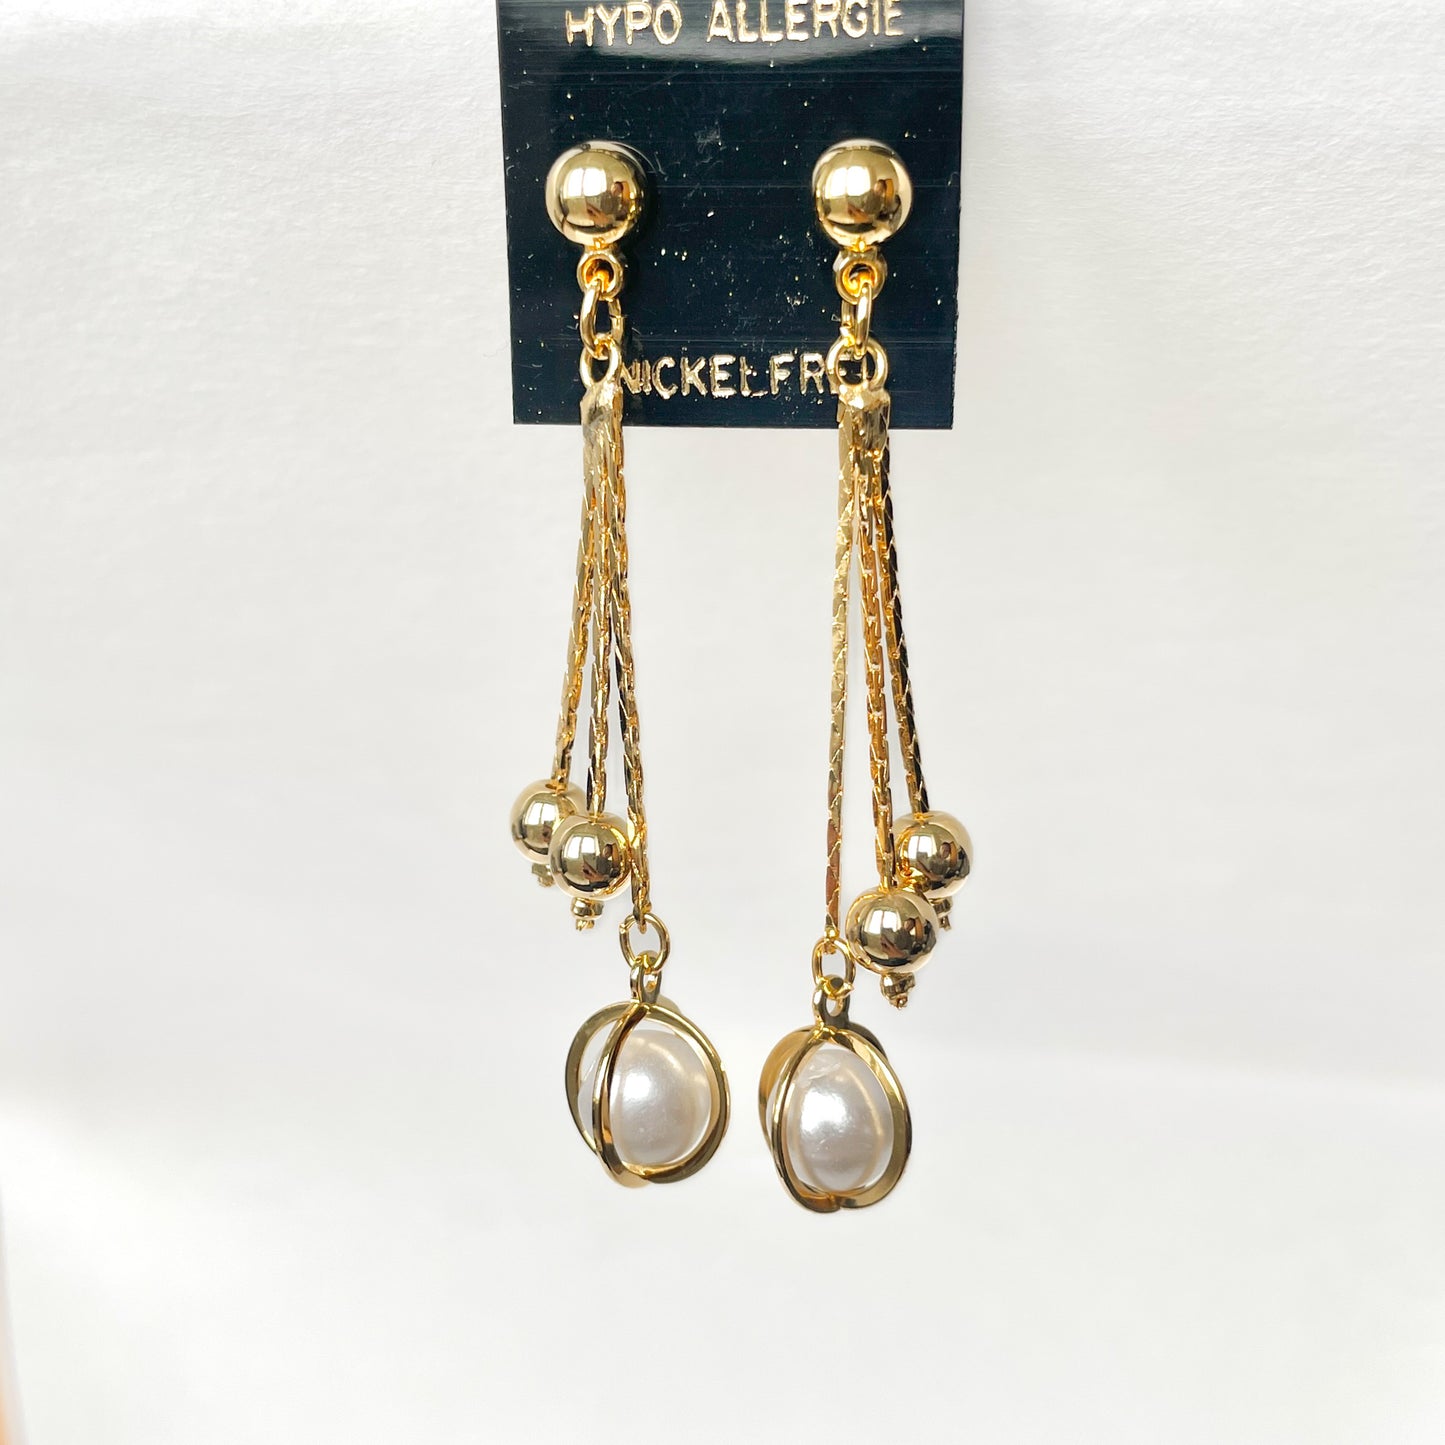 WL_1205231 Handmade Fashion Jewerly Earrings